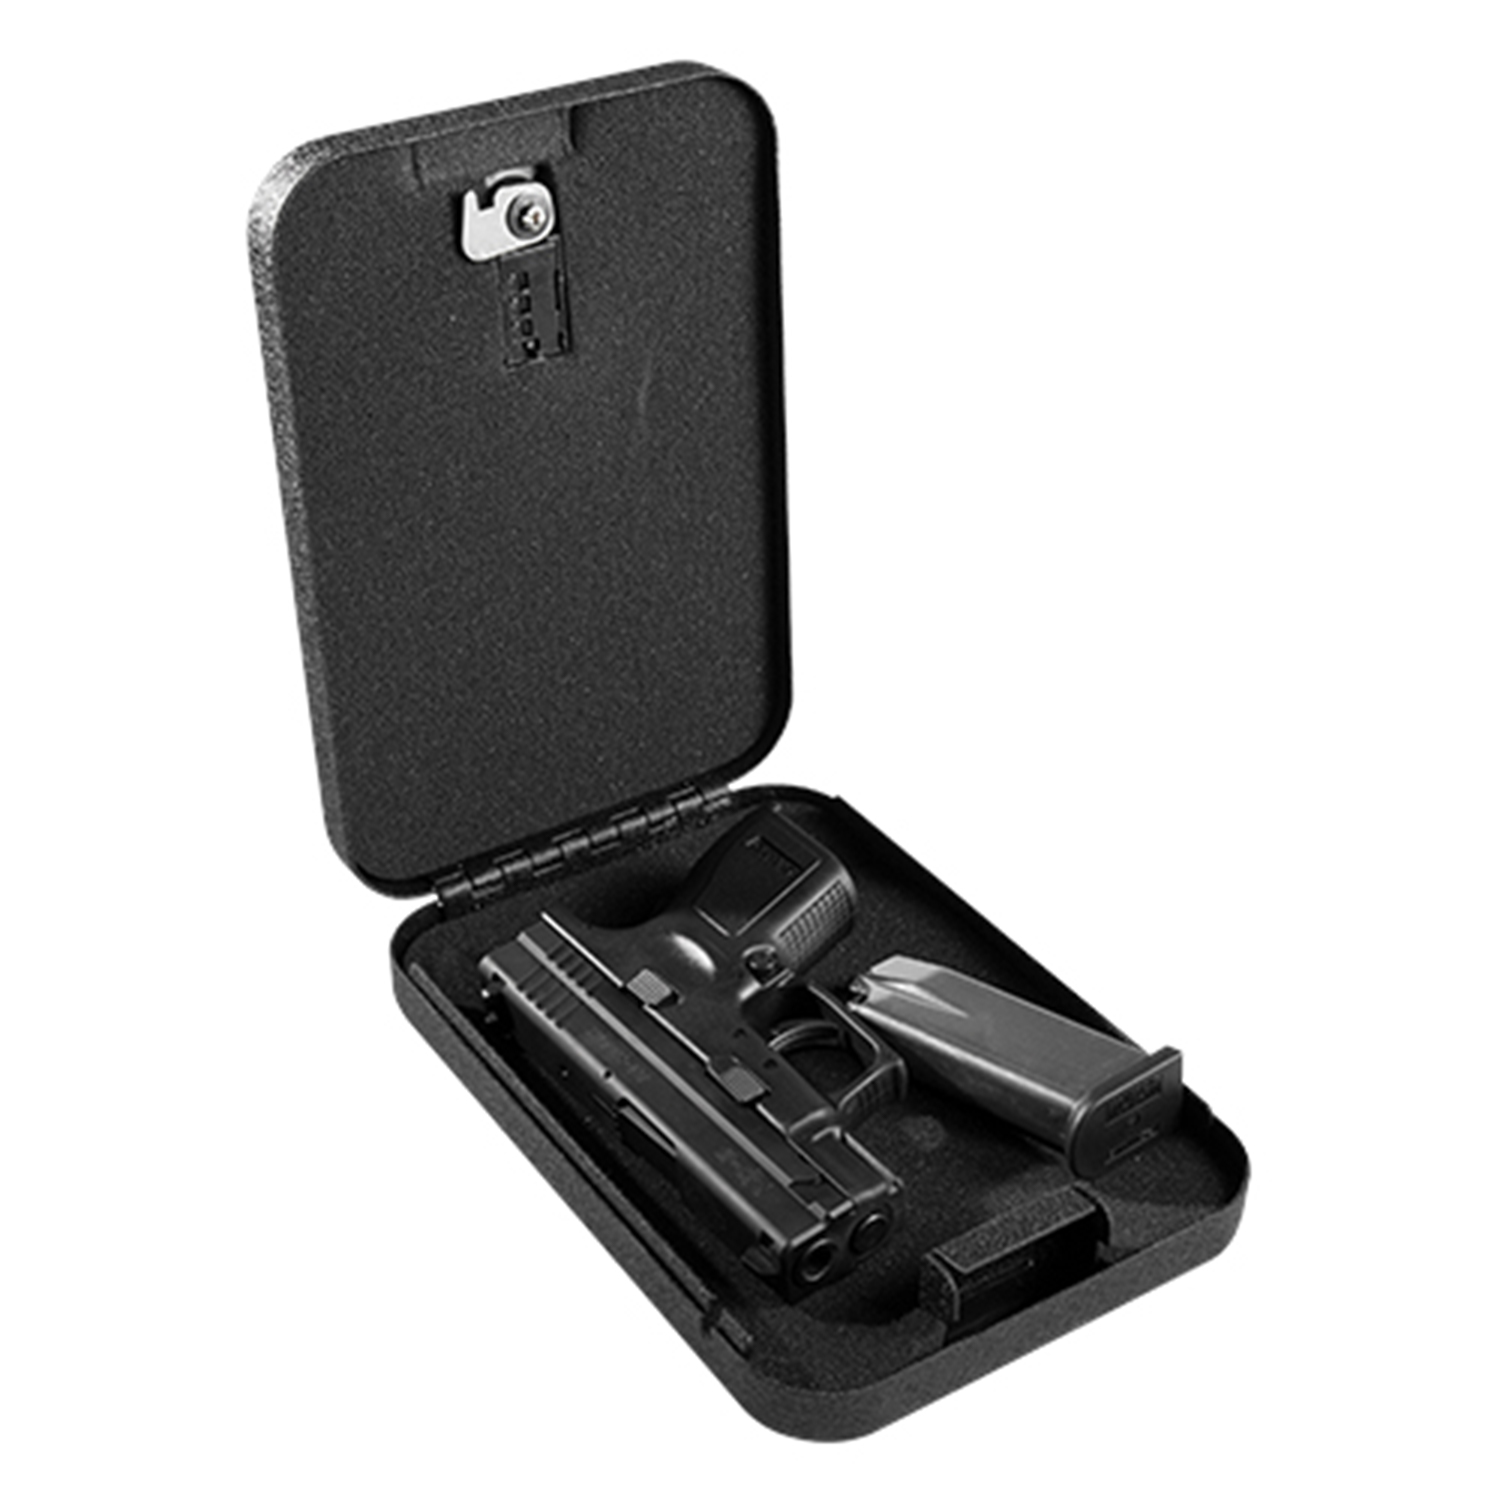 GunVault NanoVault 300 TSA Approved Compact Portable Travel Lock Gun Safe - image 2 of 5